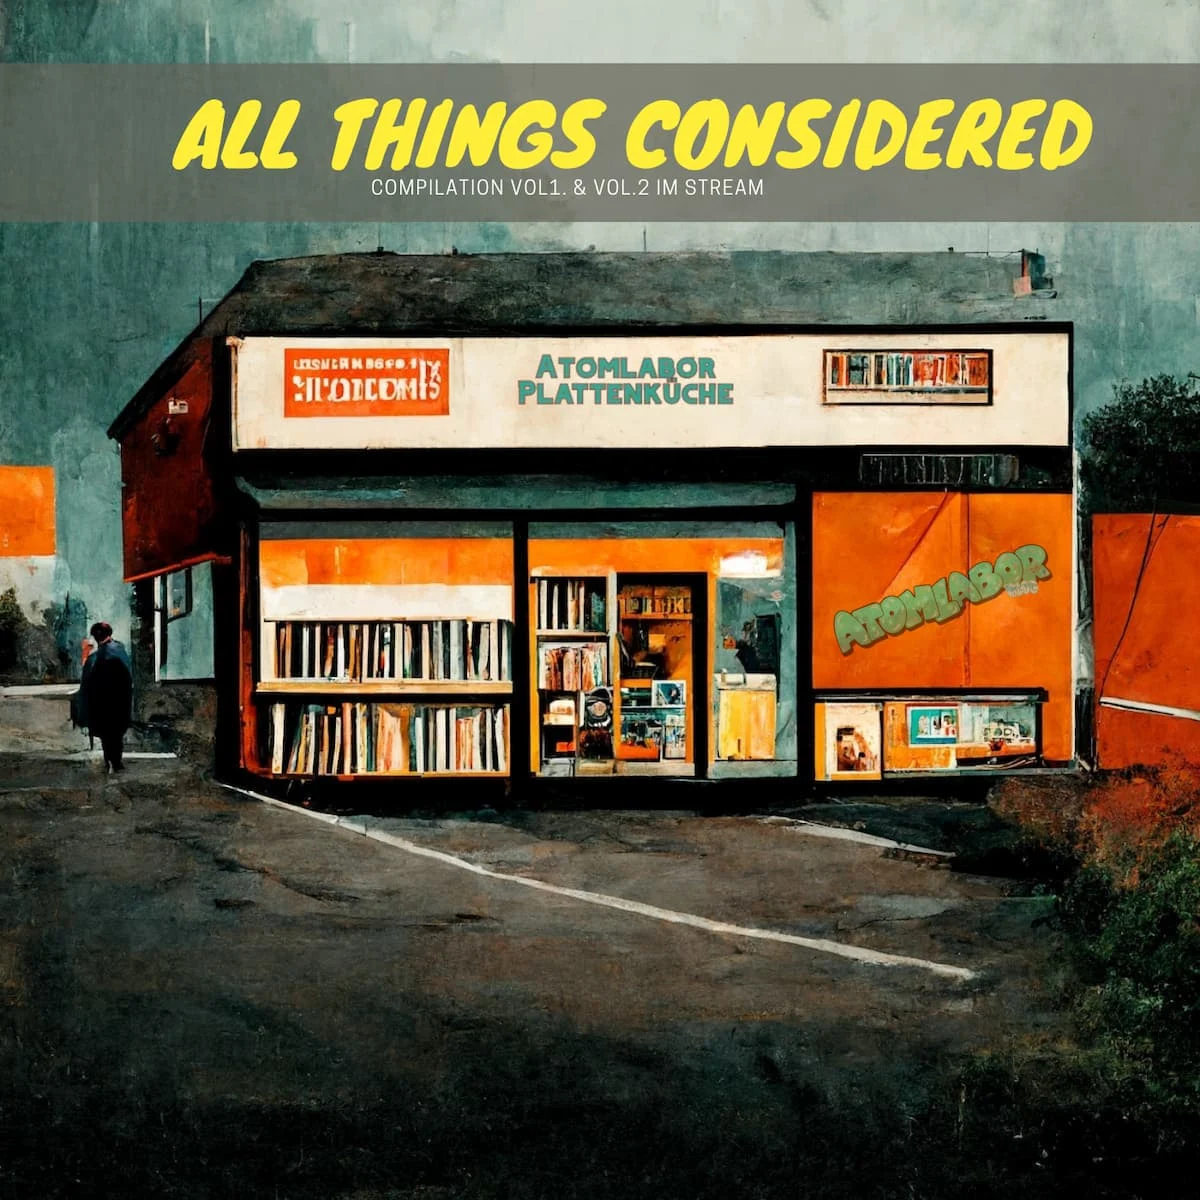 All Things Considered Vol.1 & Vol. 2 | Full Album Stream